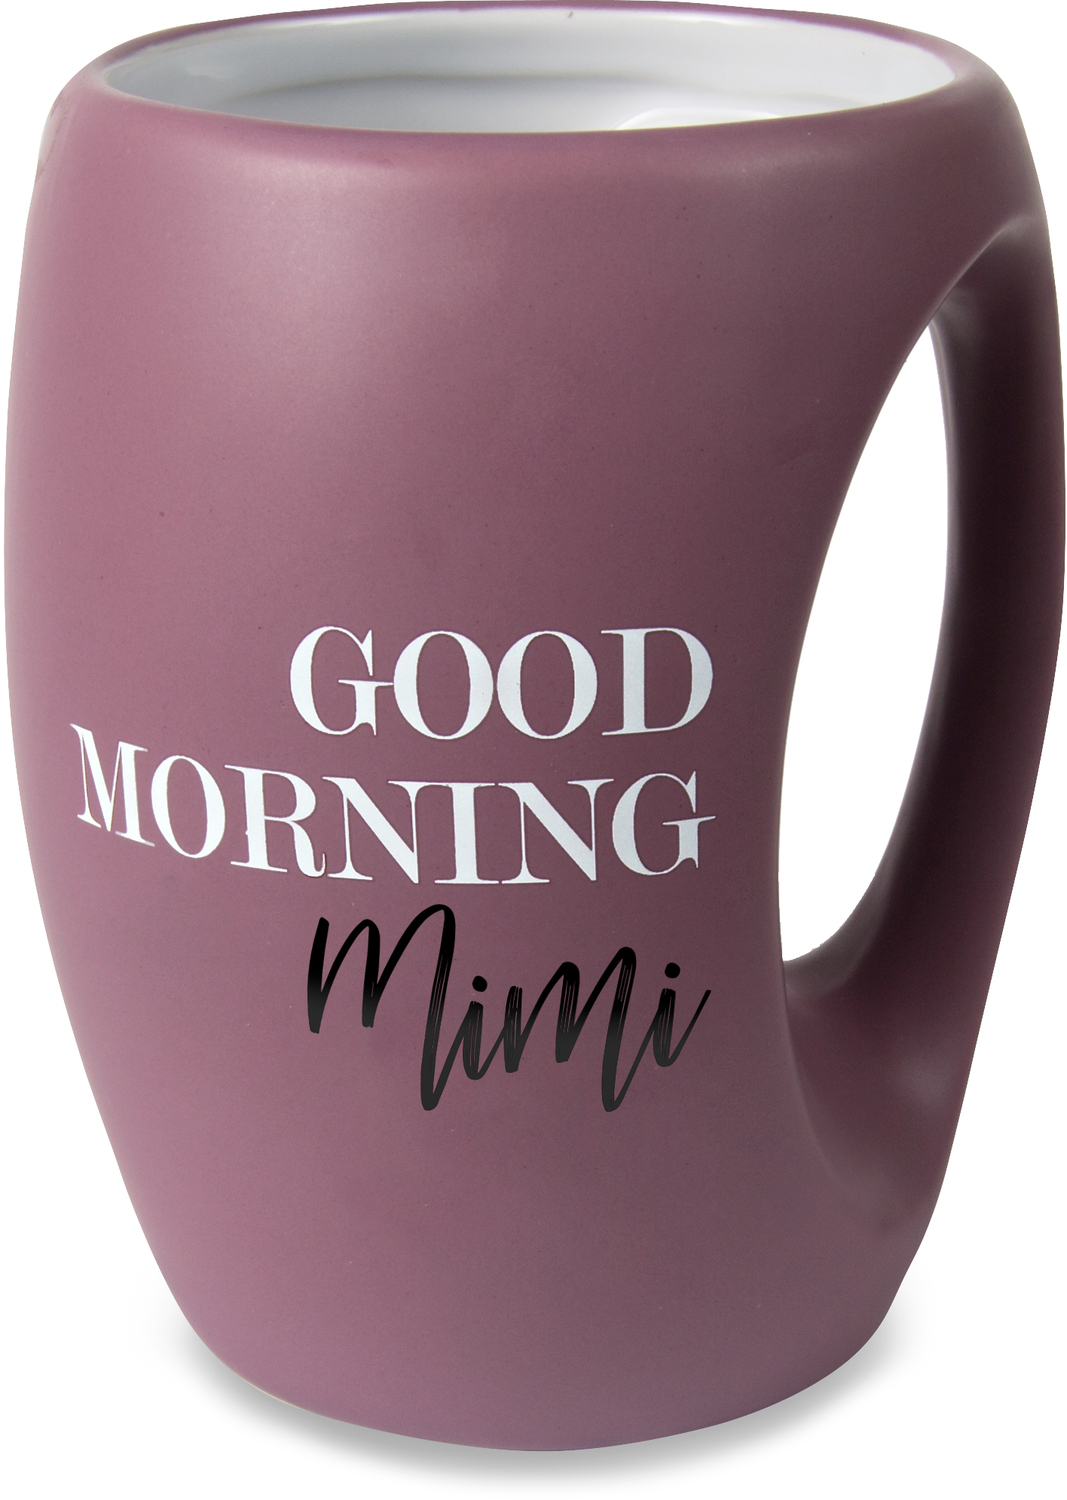 Mimi by Good Morning - Mimi - 16 oz Cup